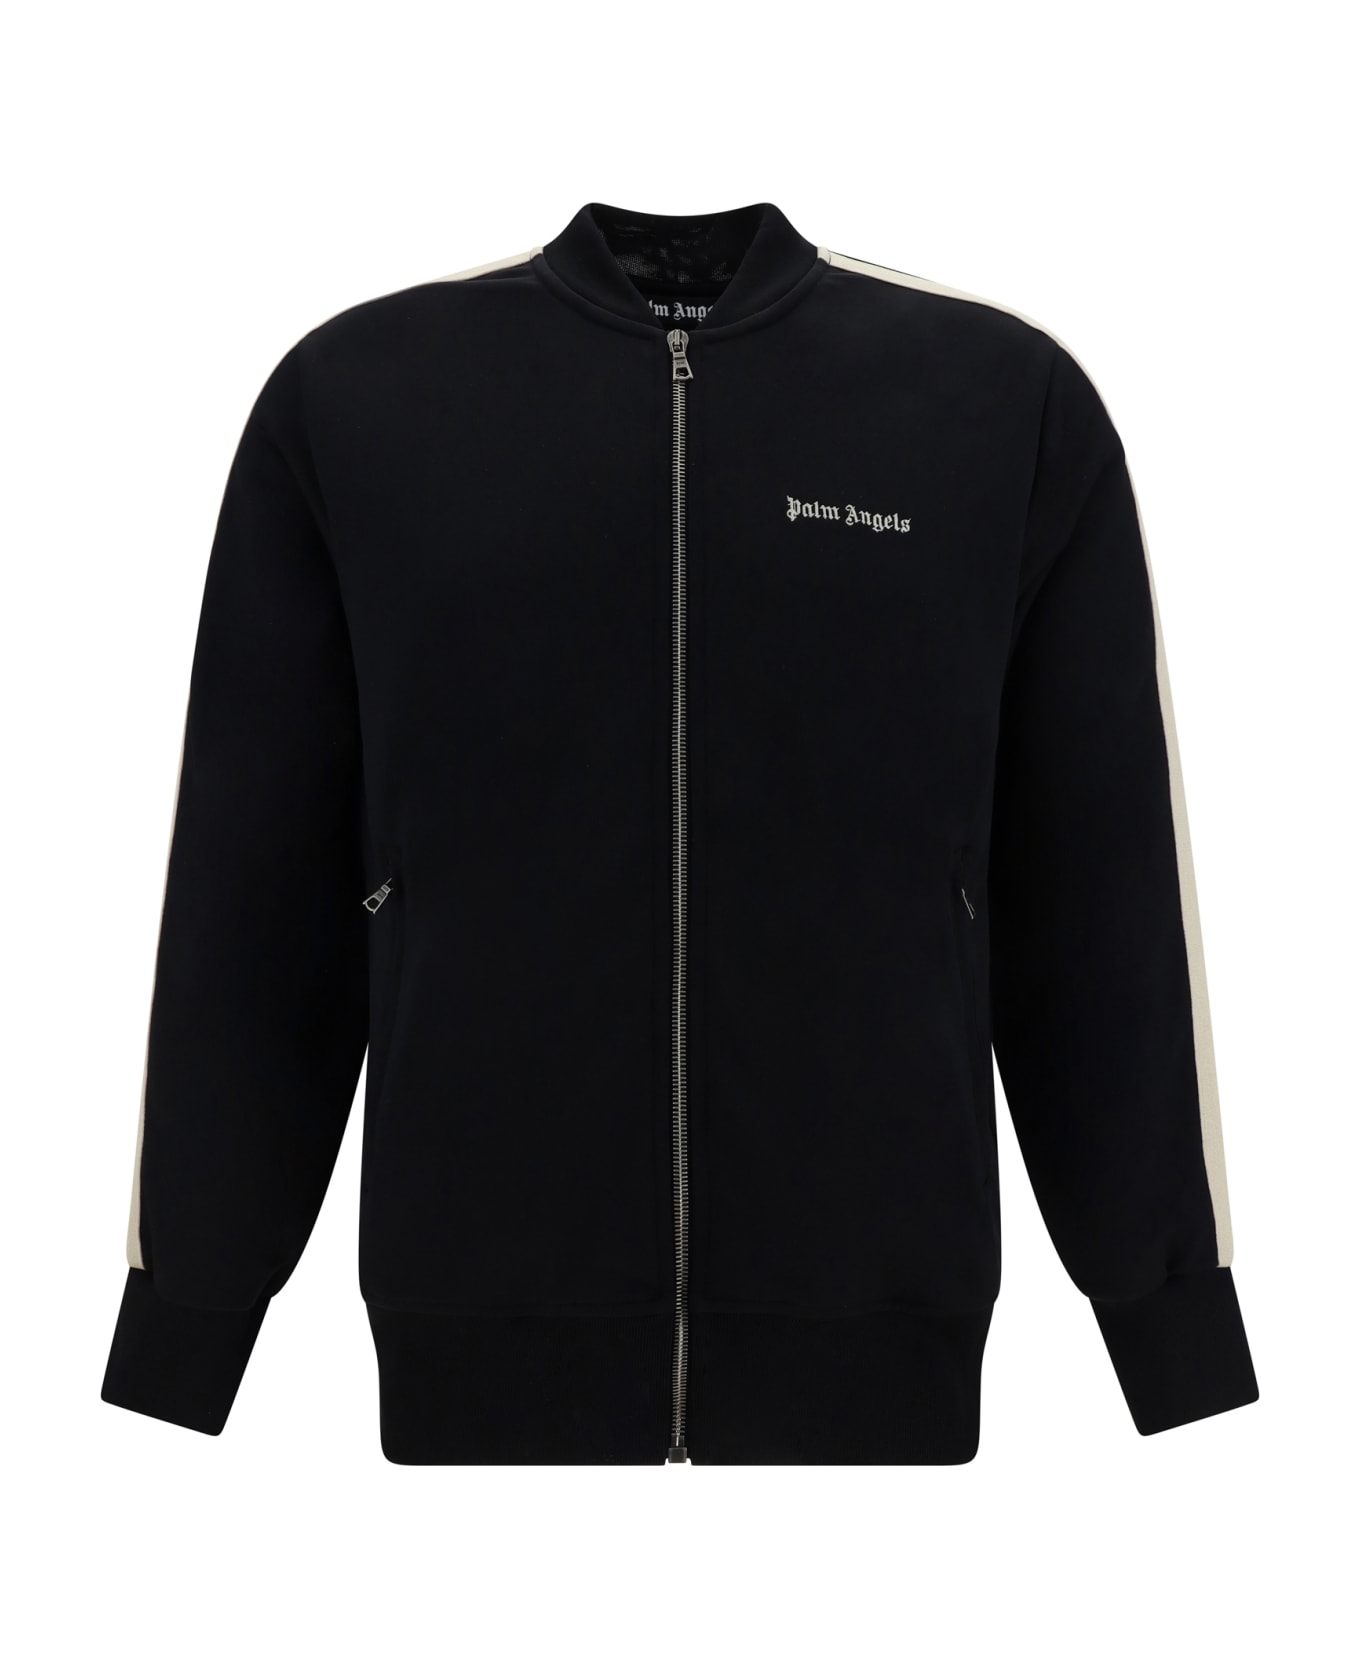 Palm Angels Track Sweatshirt With Zip - Black Off White フリース